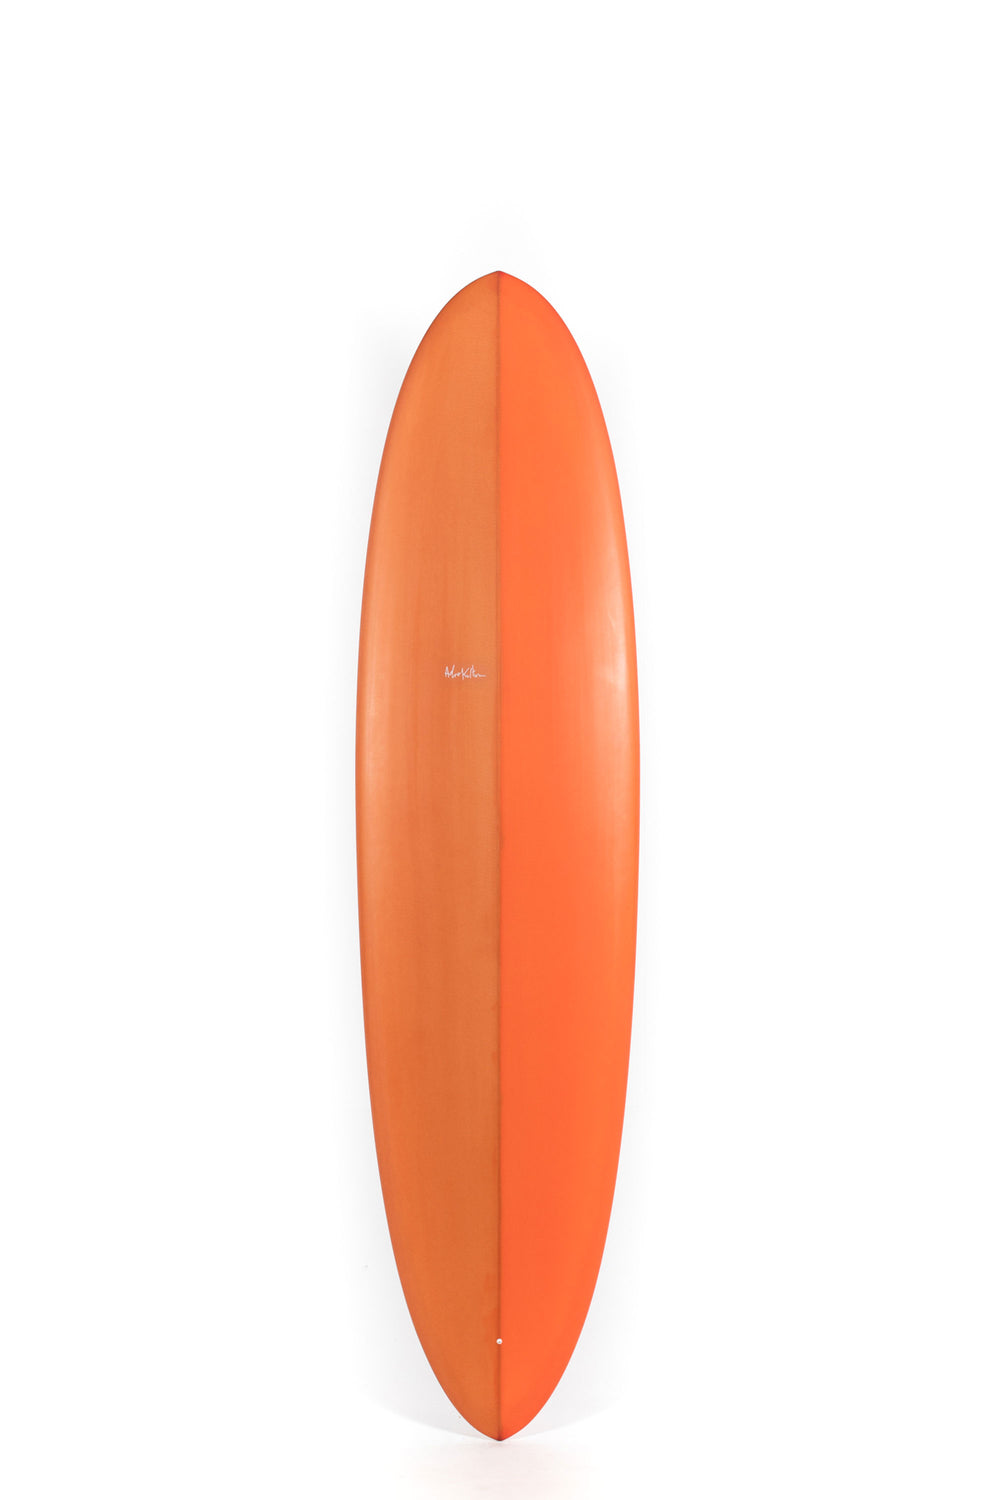 Pukas Surf Shop - Adrokultura Surfboards - SINGLE EGG - 7'4